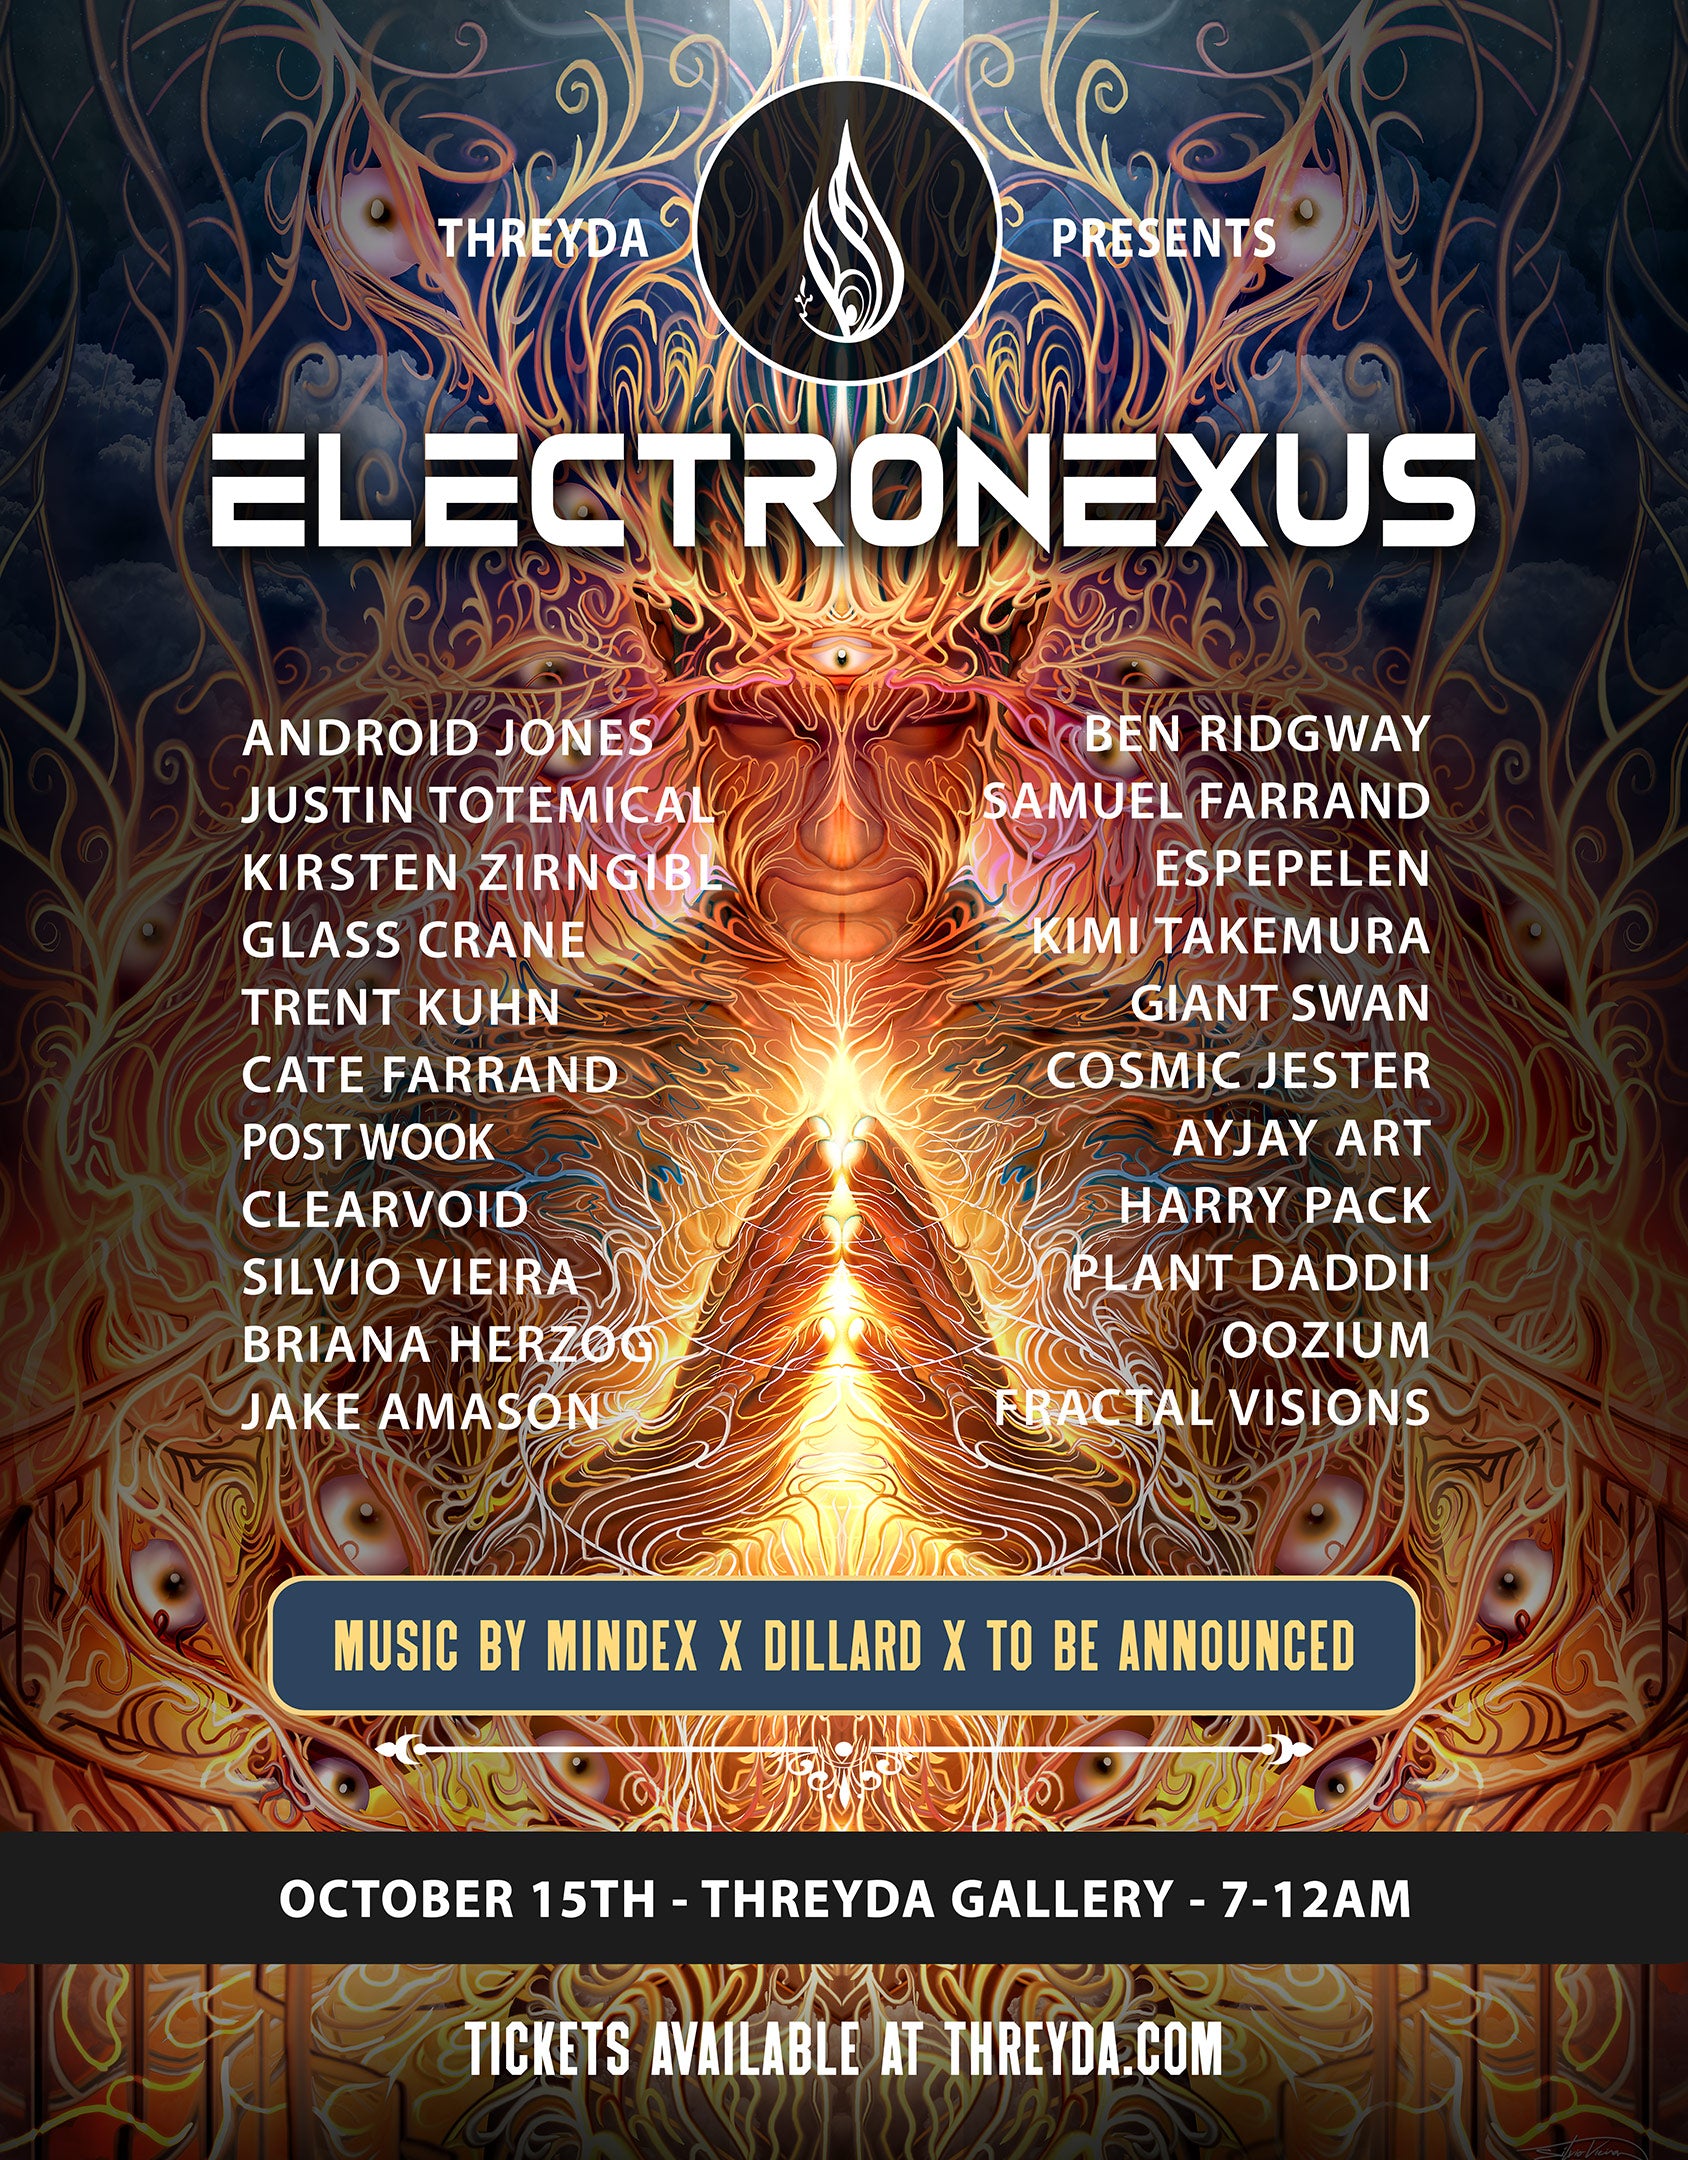 ELECTRONEXUS Event Ticket - October 15th, Denver CO